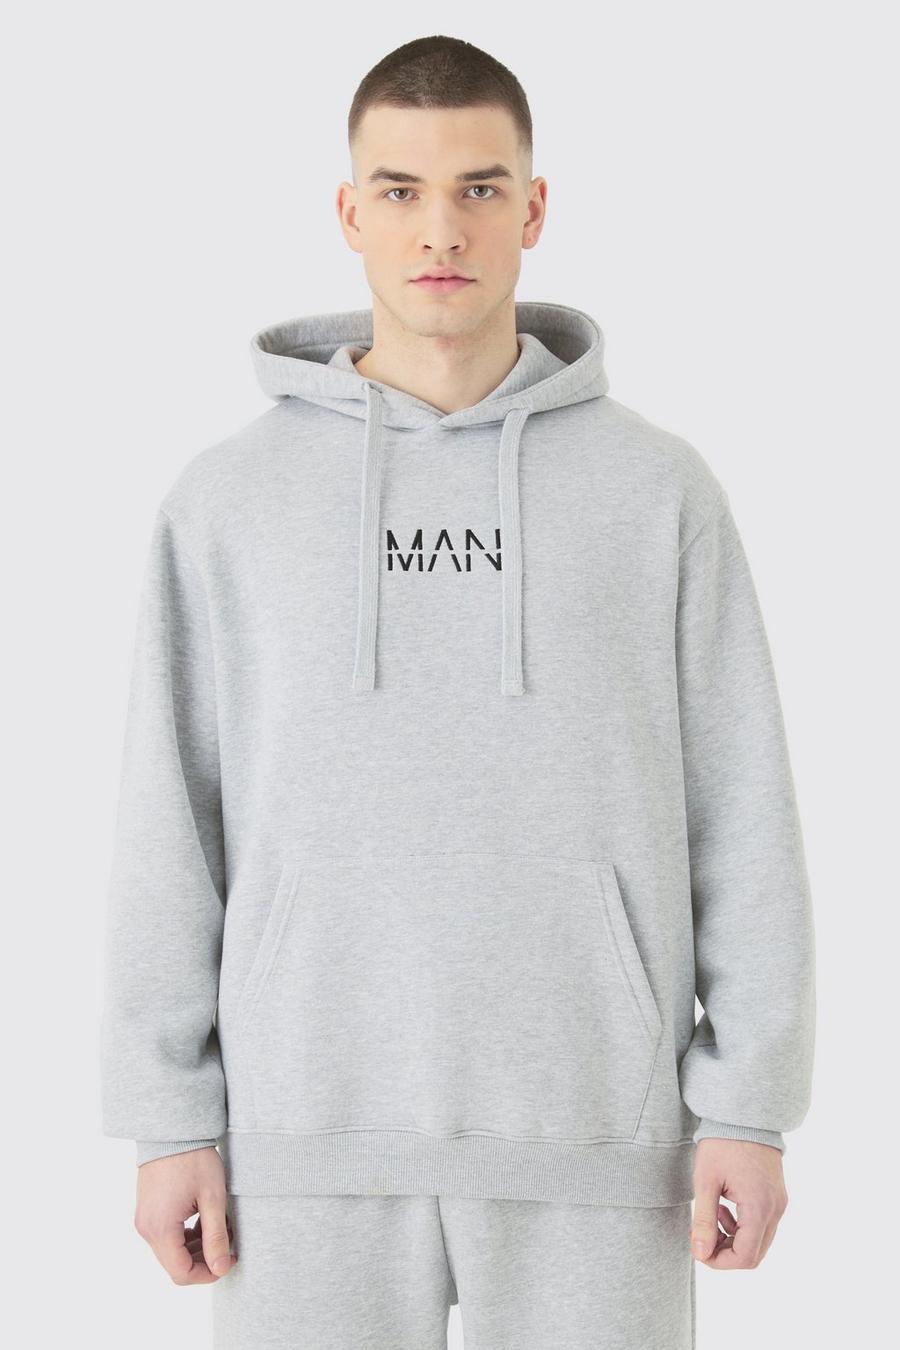 Tall Basic Man Dash Hoodie in Grau, Grey marl image number 1